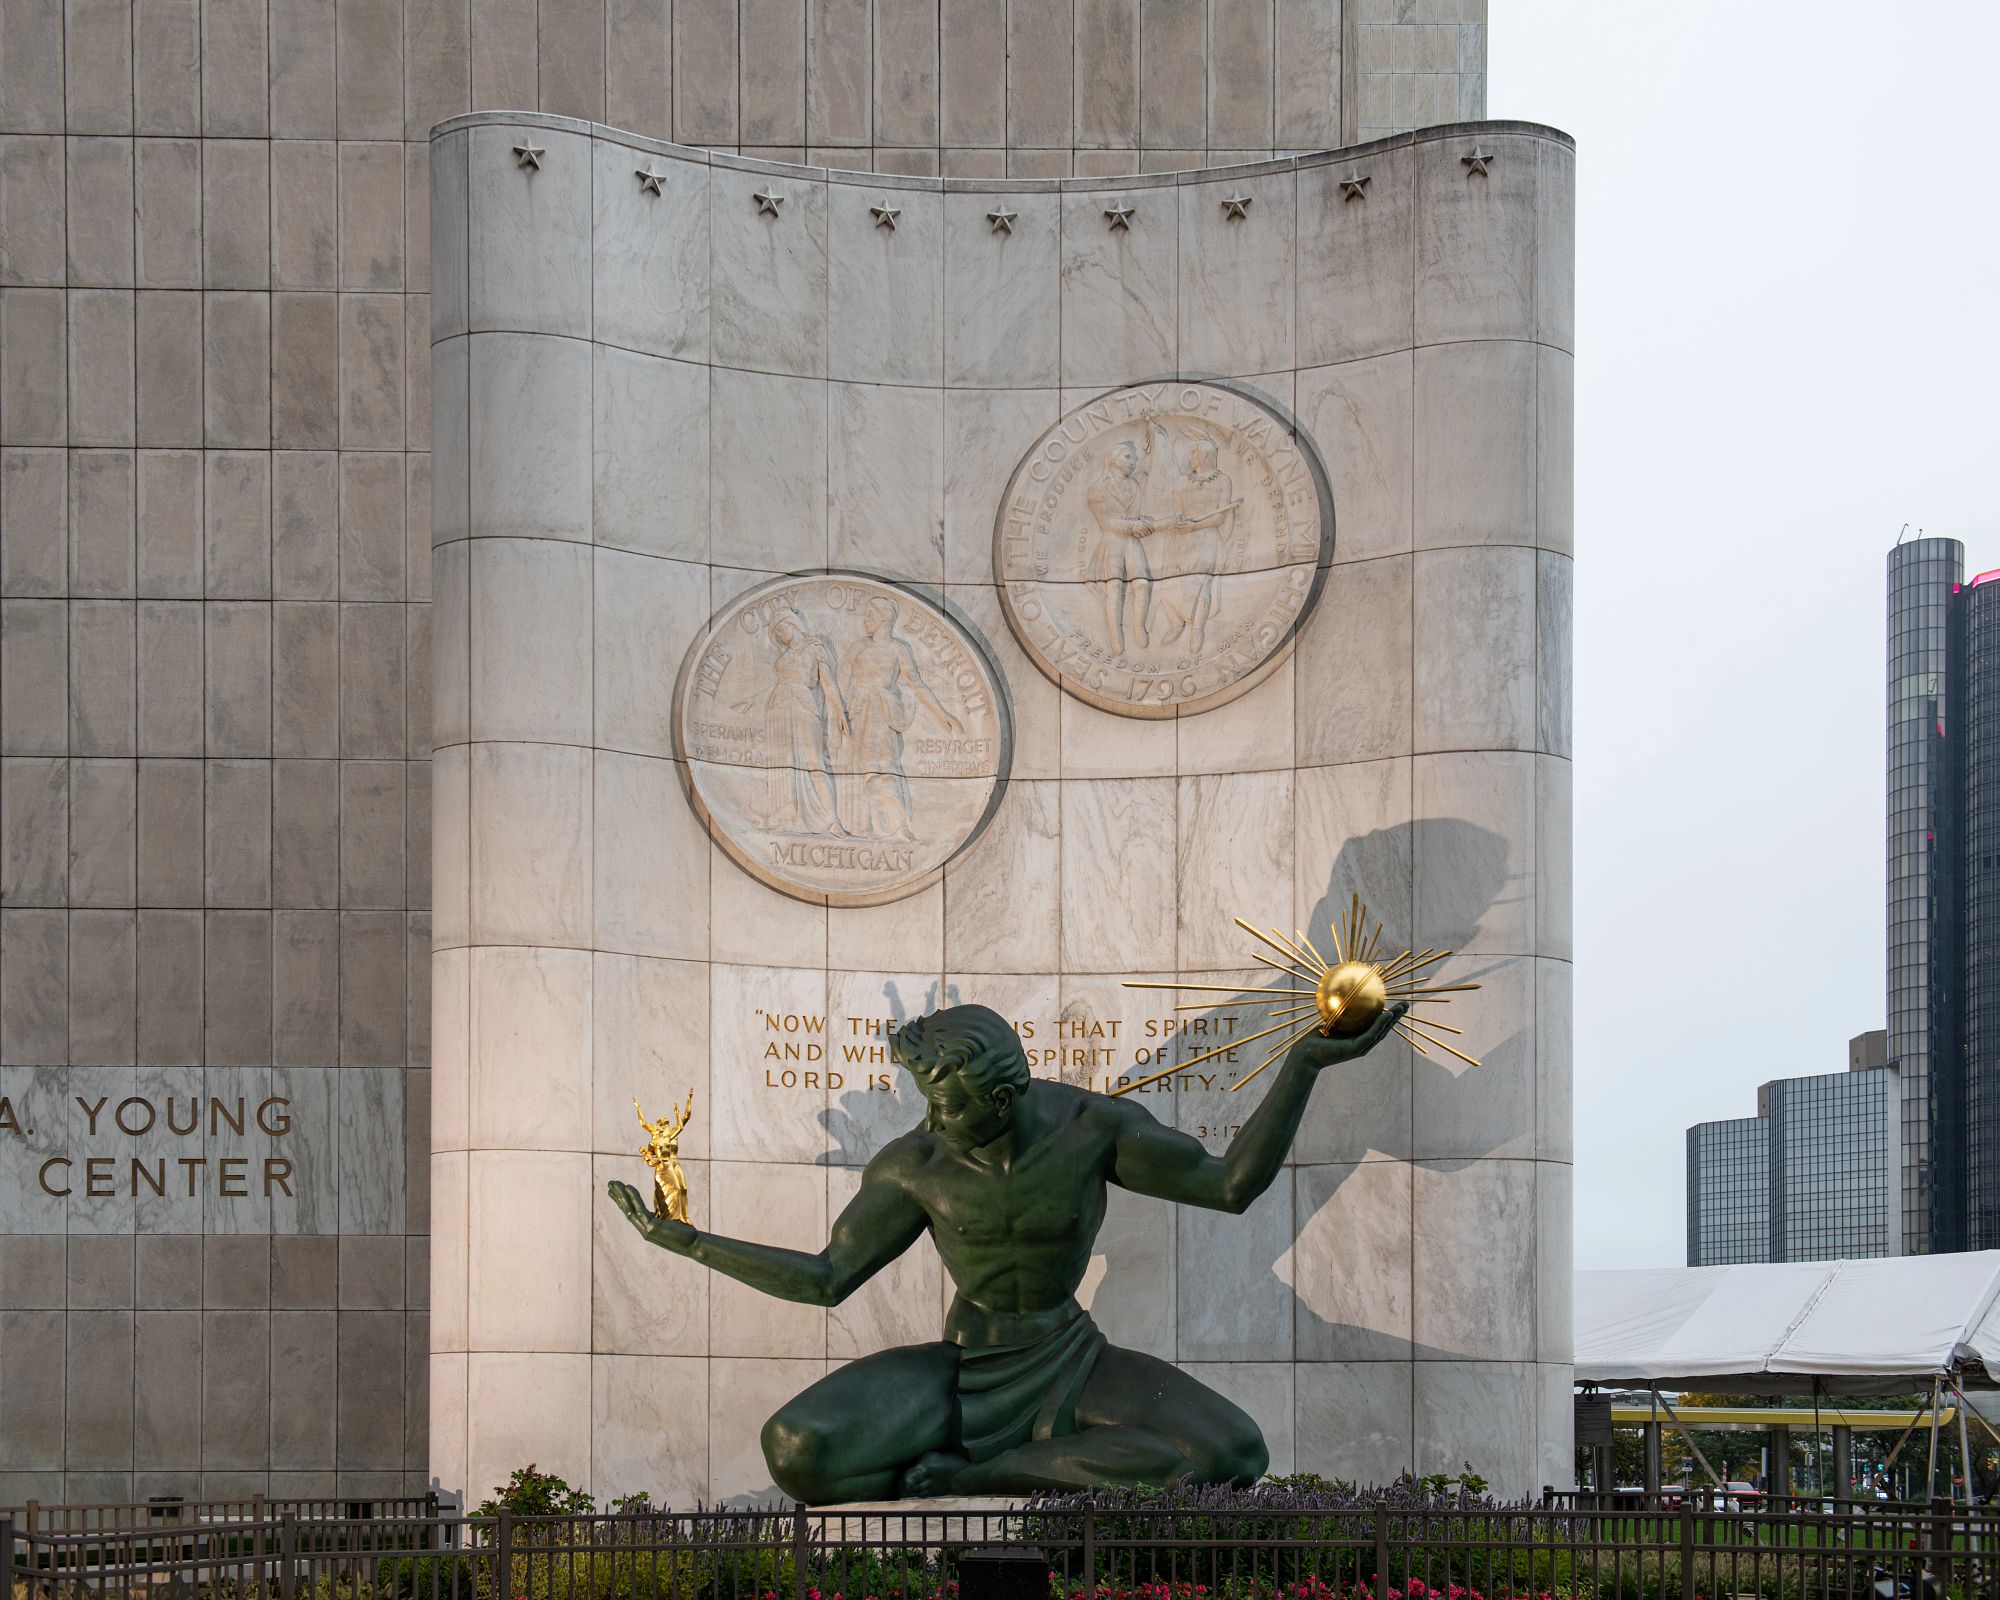 The Spirit of Detroit monument